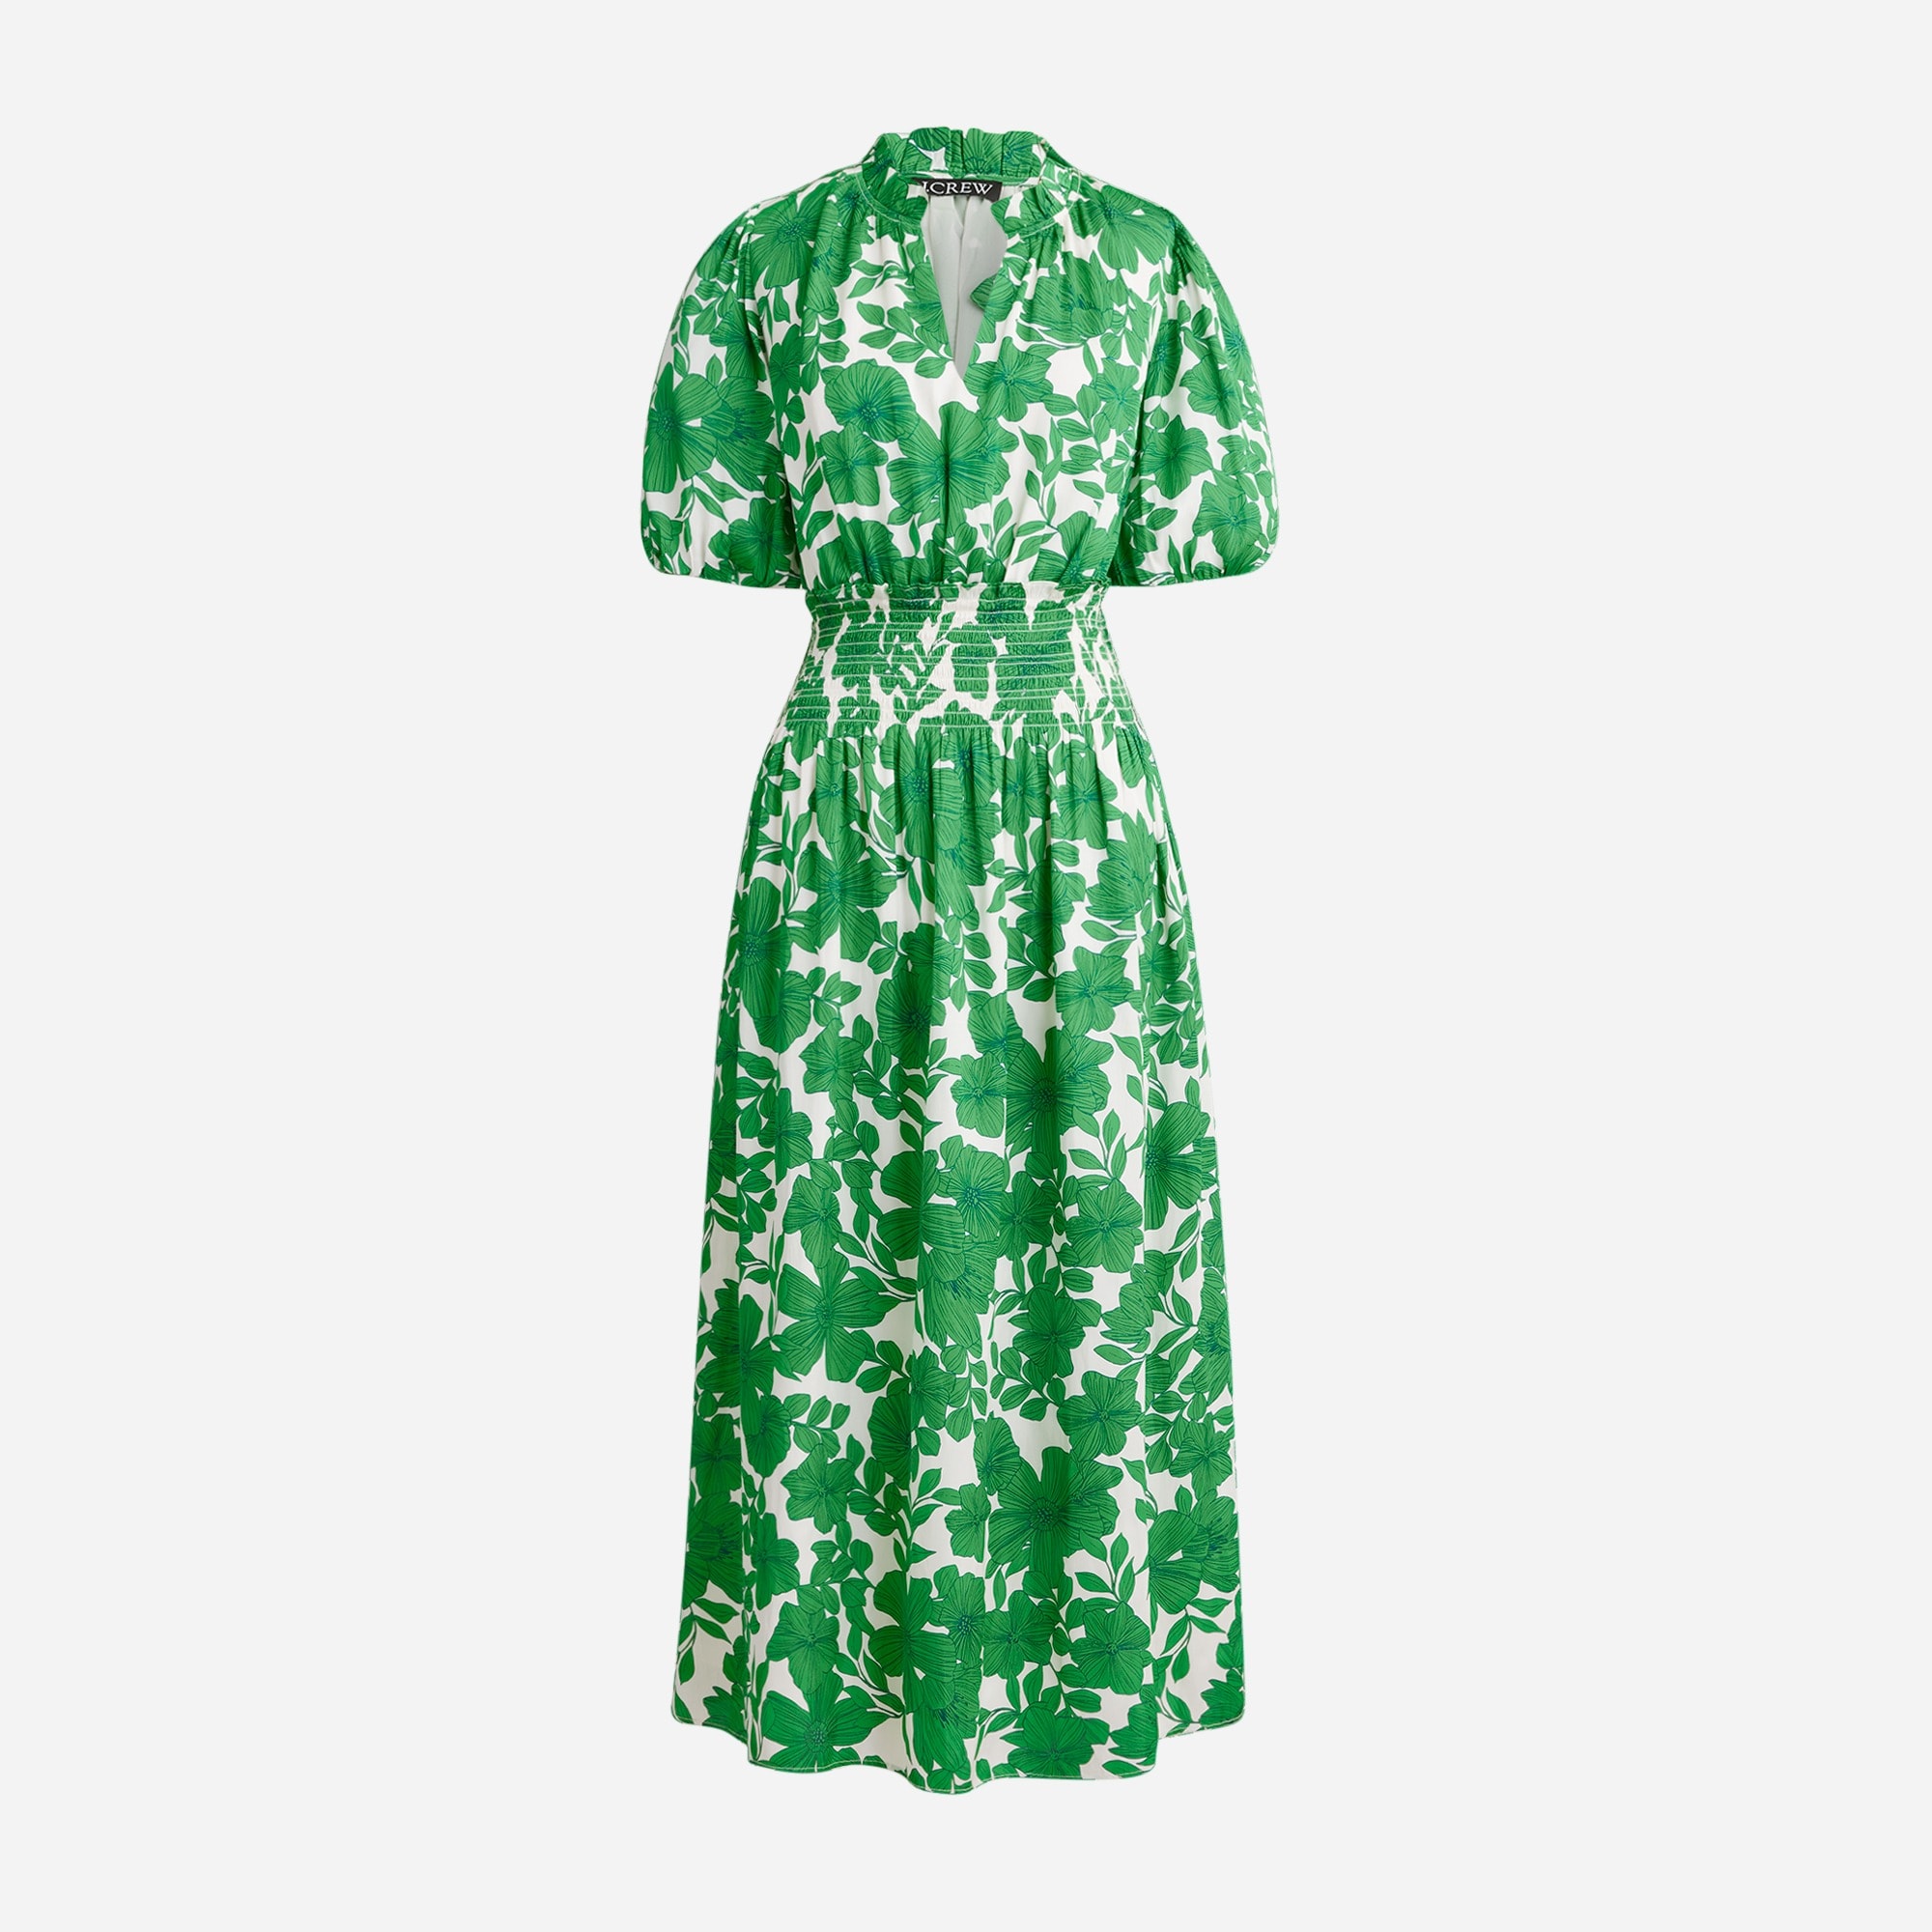  Smocked-waist short-sleeve dress in greenhouse floral print